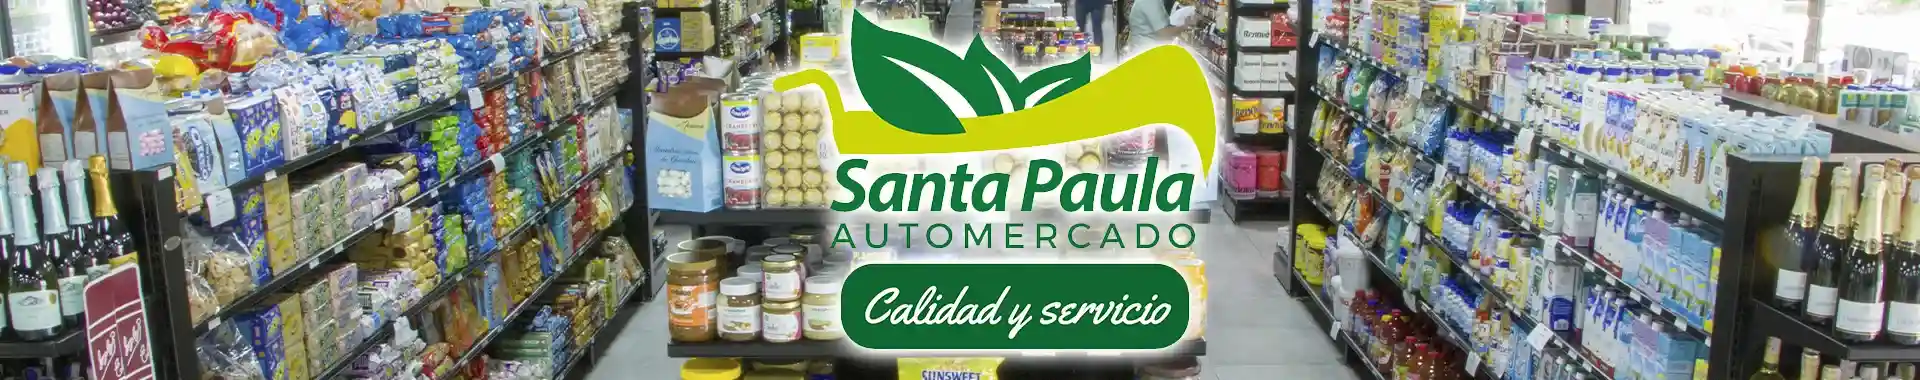 Imagen 1 del perfil de Automercado Santa Paula